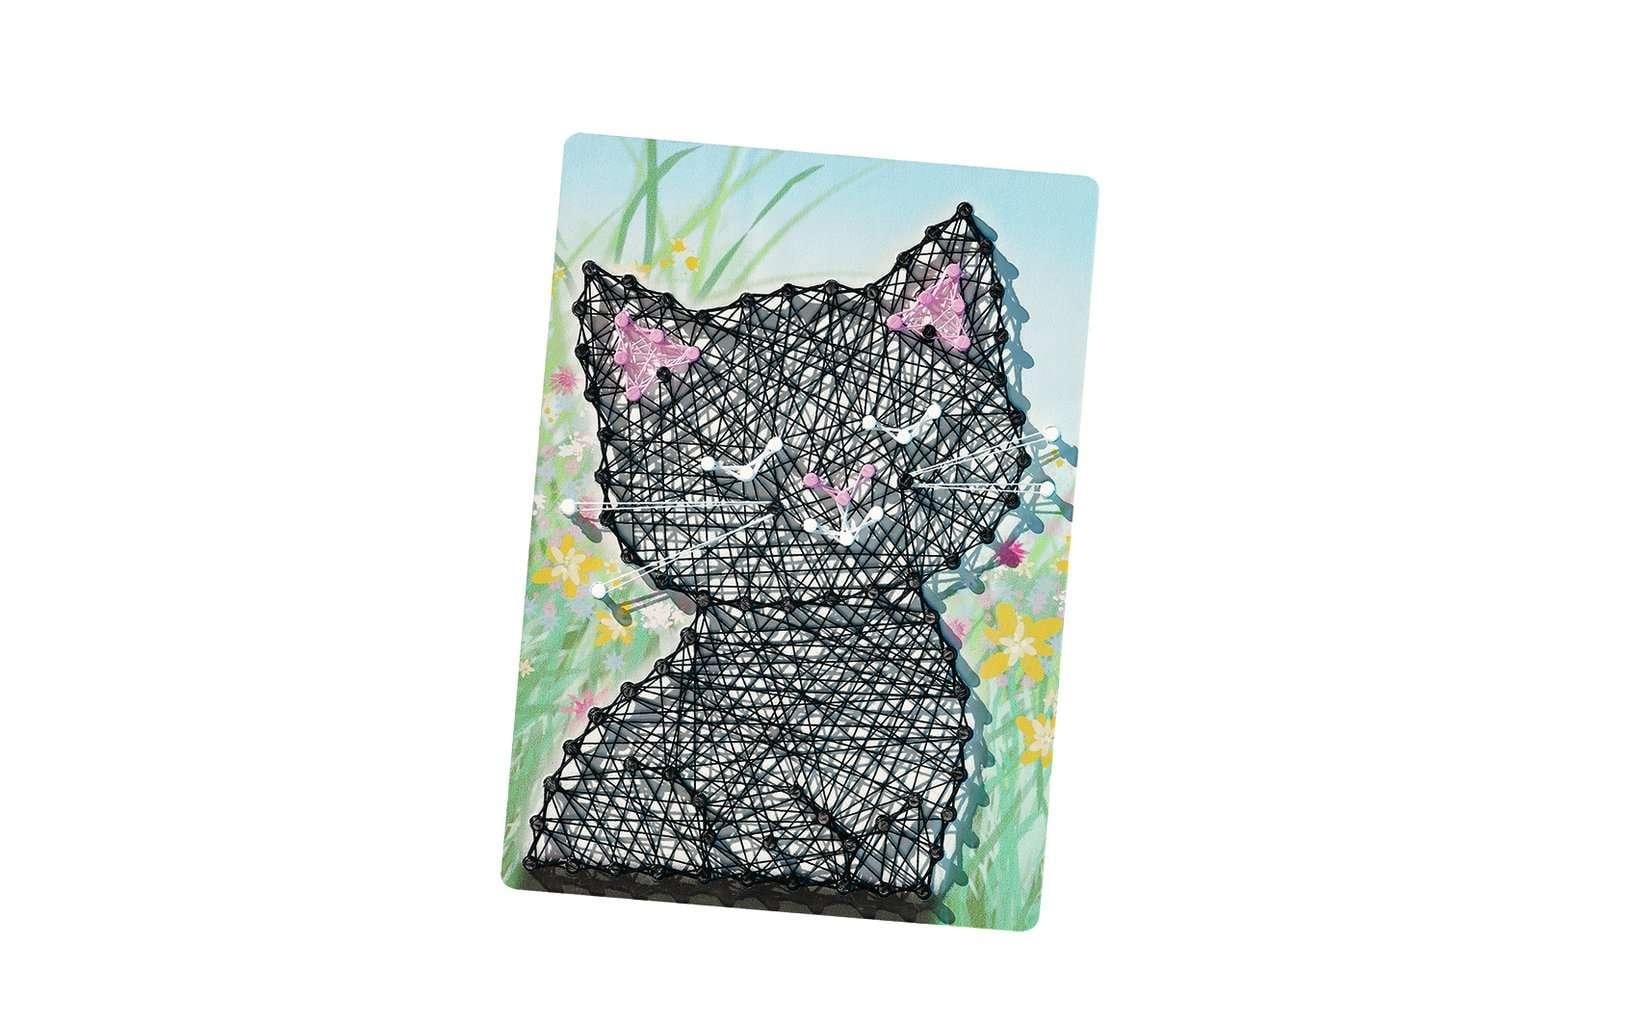 Ravensburger Kreativset »Be Creative String Art Cats«